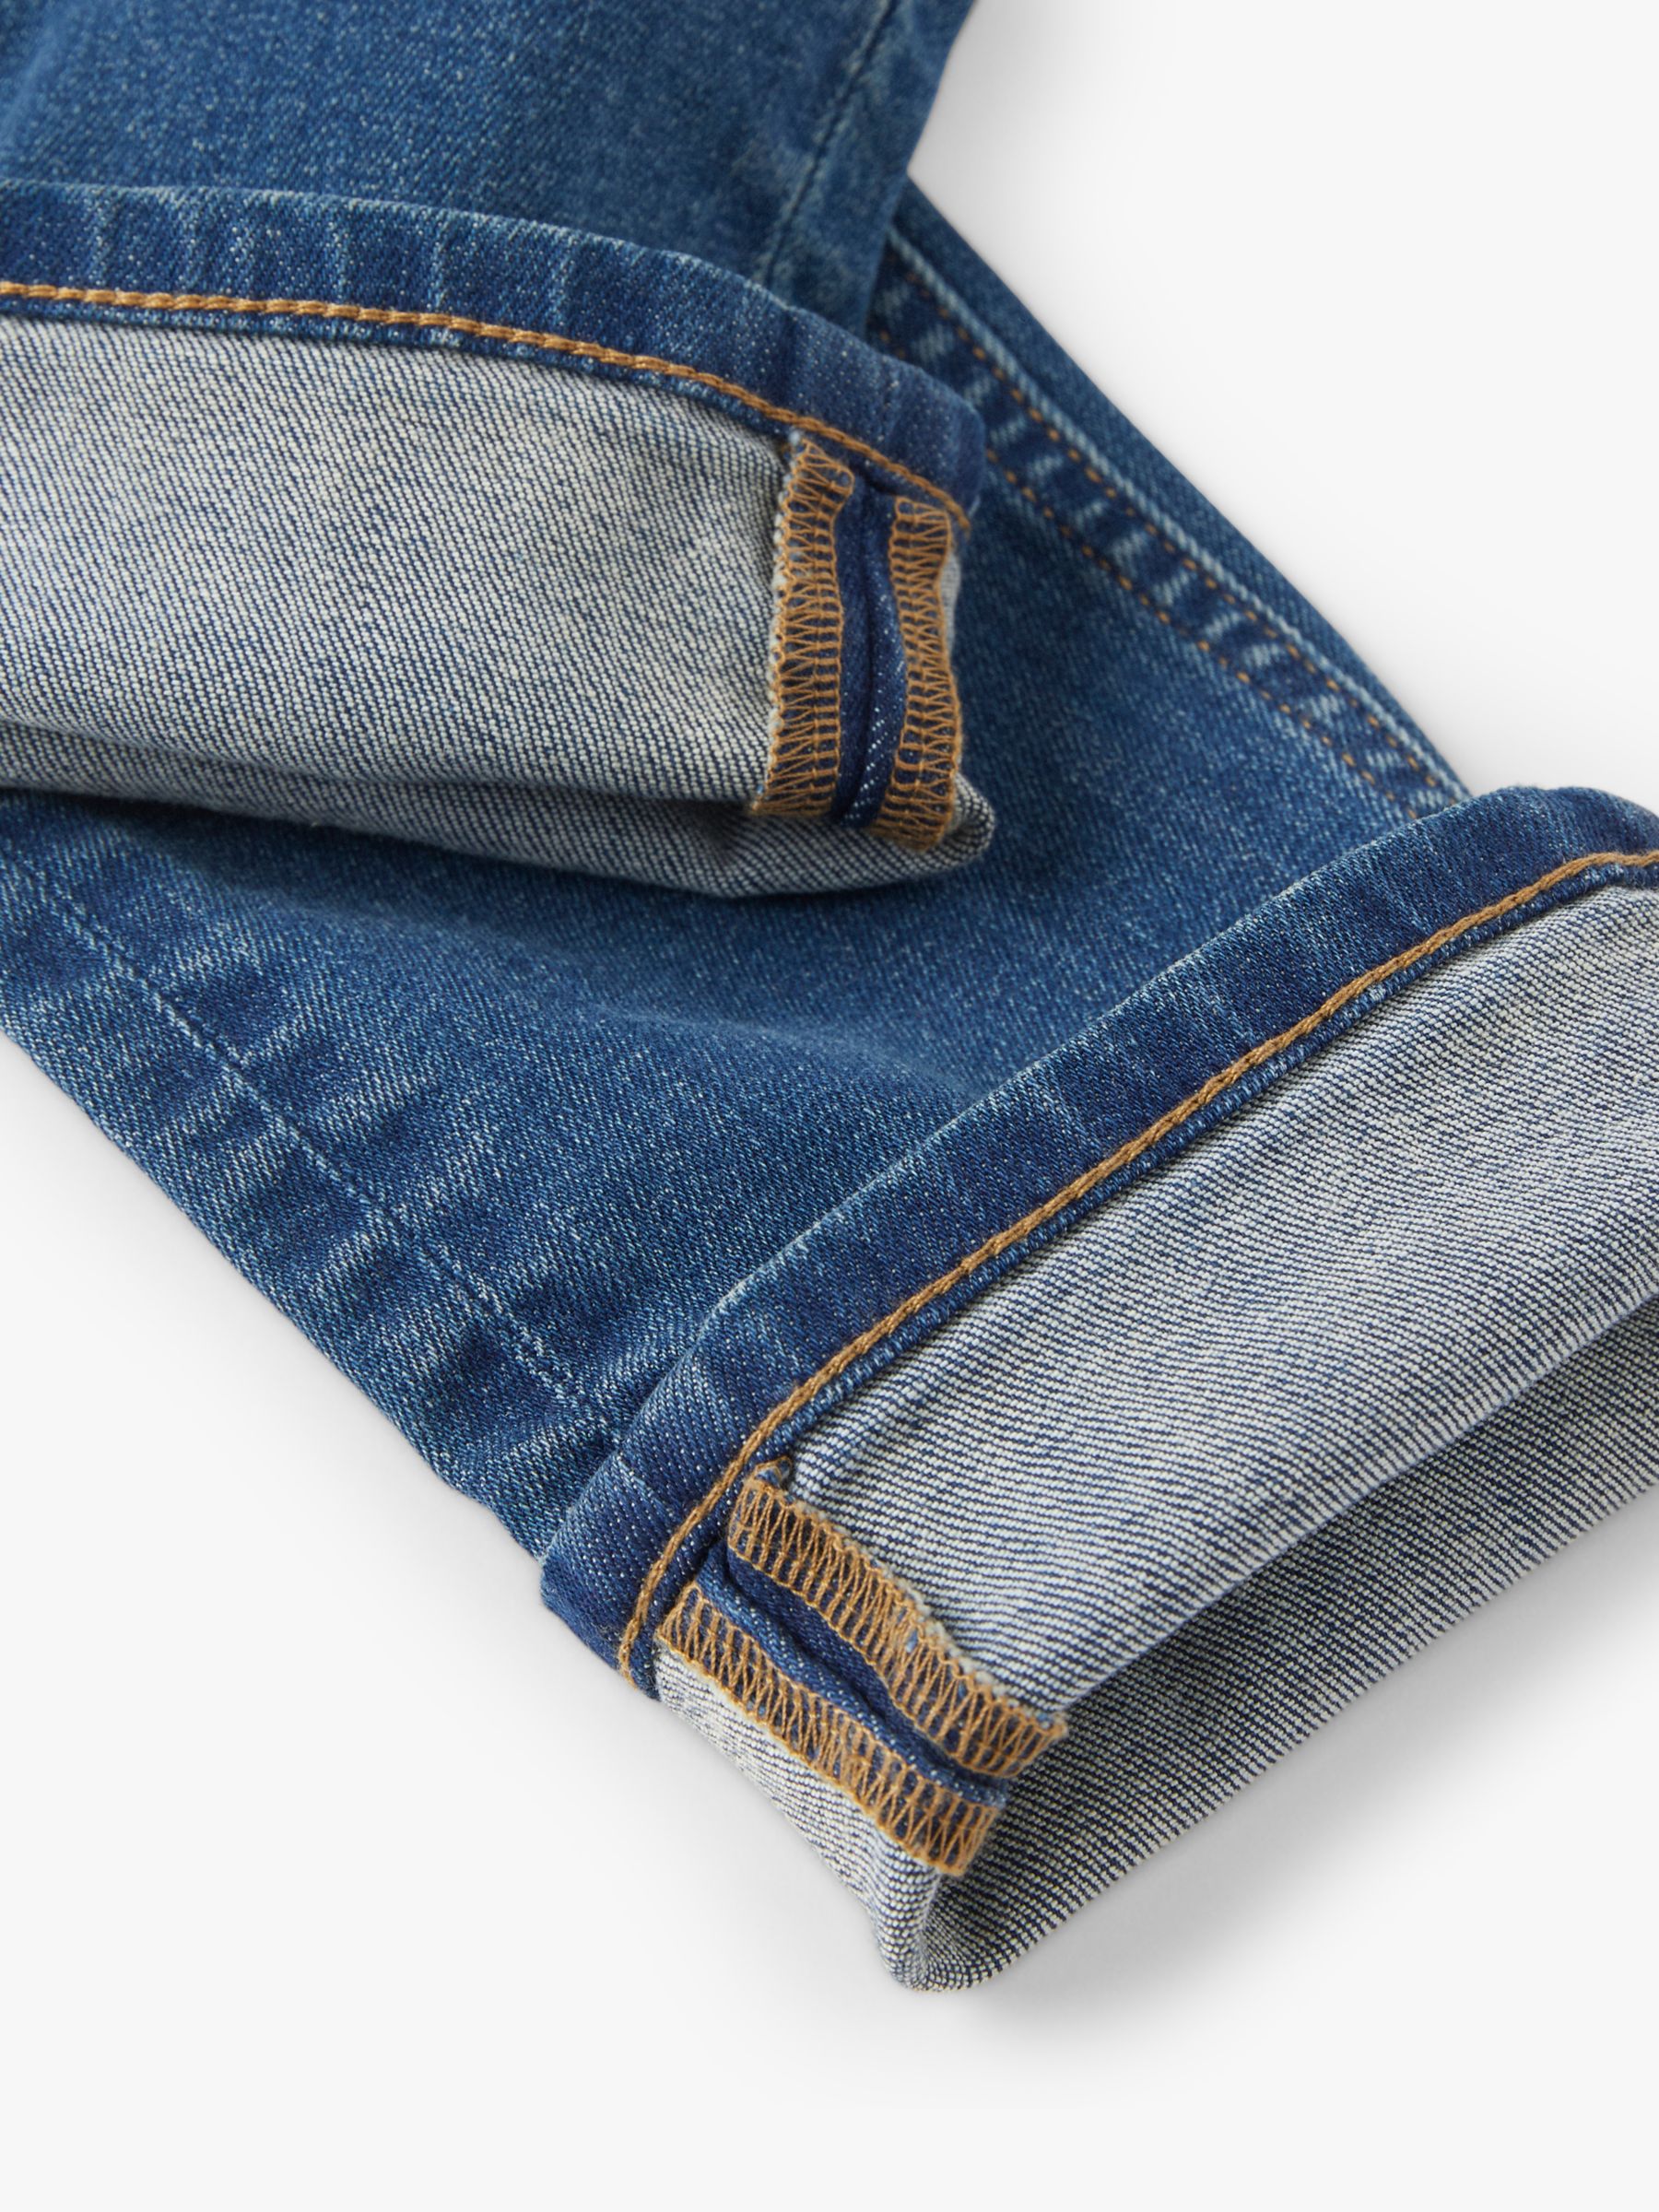 Buy Polarn O. Pyret Kids' GOTS Organic Cotton Regular Jeans, Blue Online at johnlewis.com